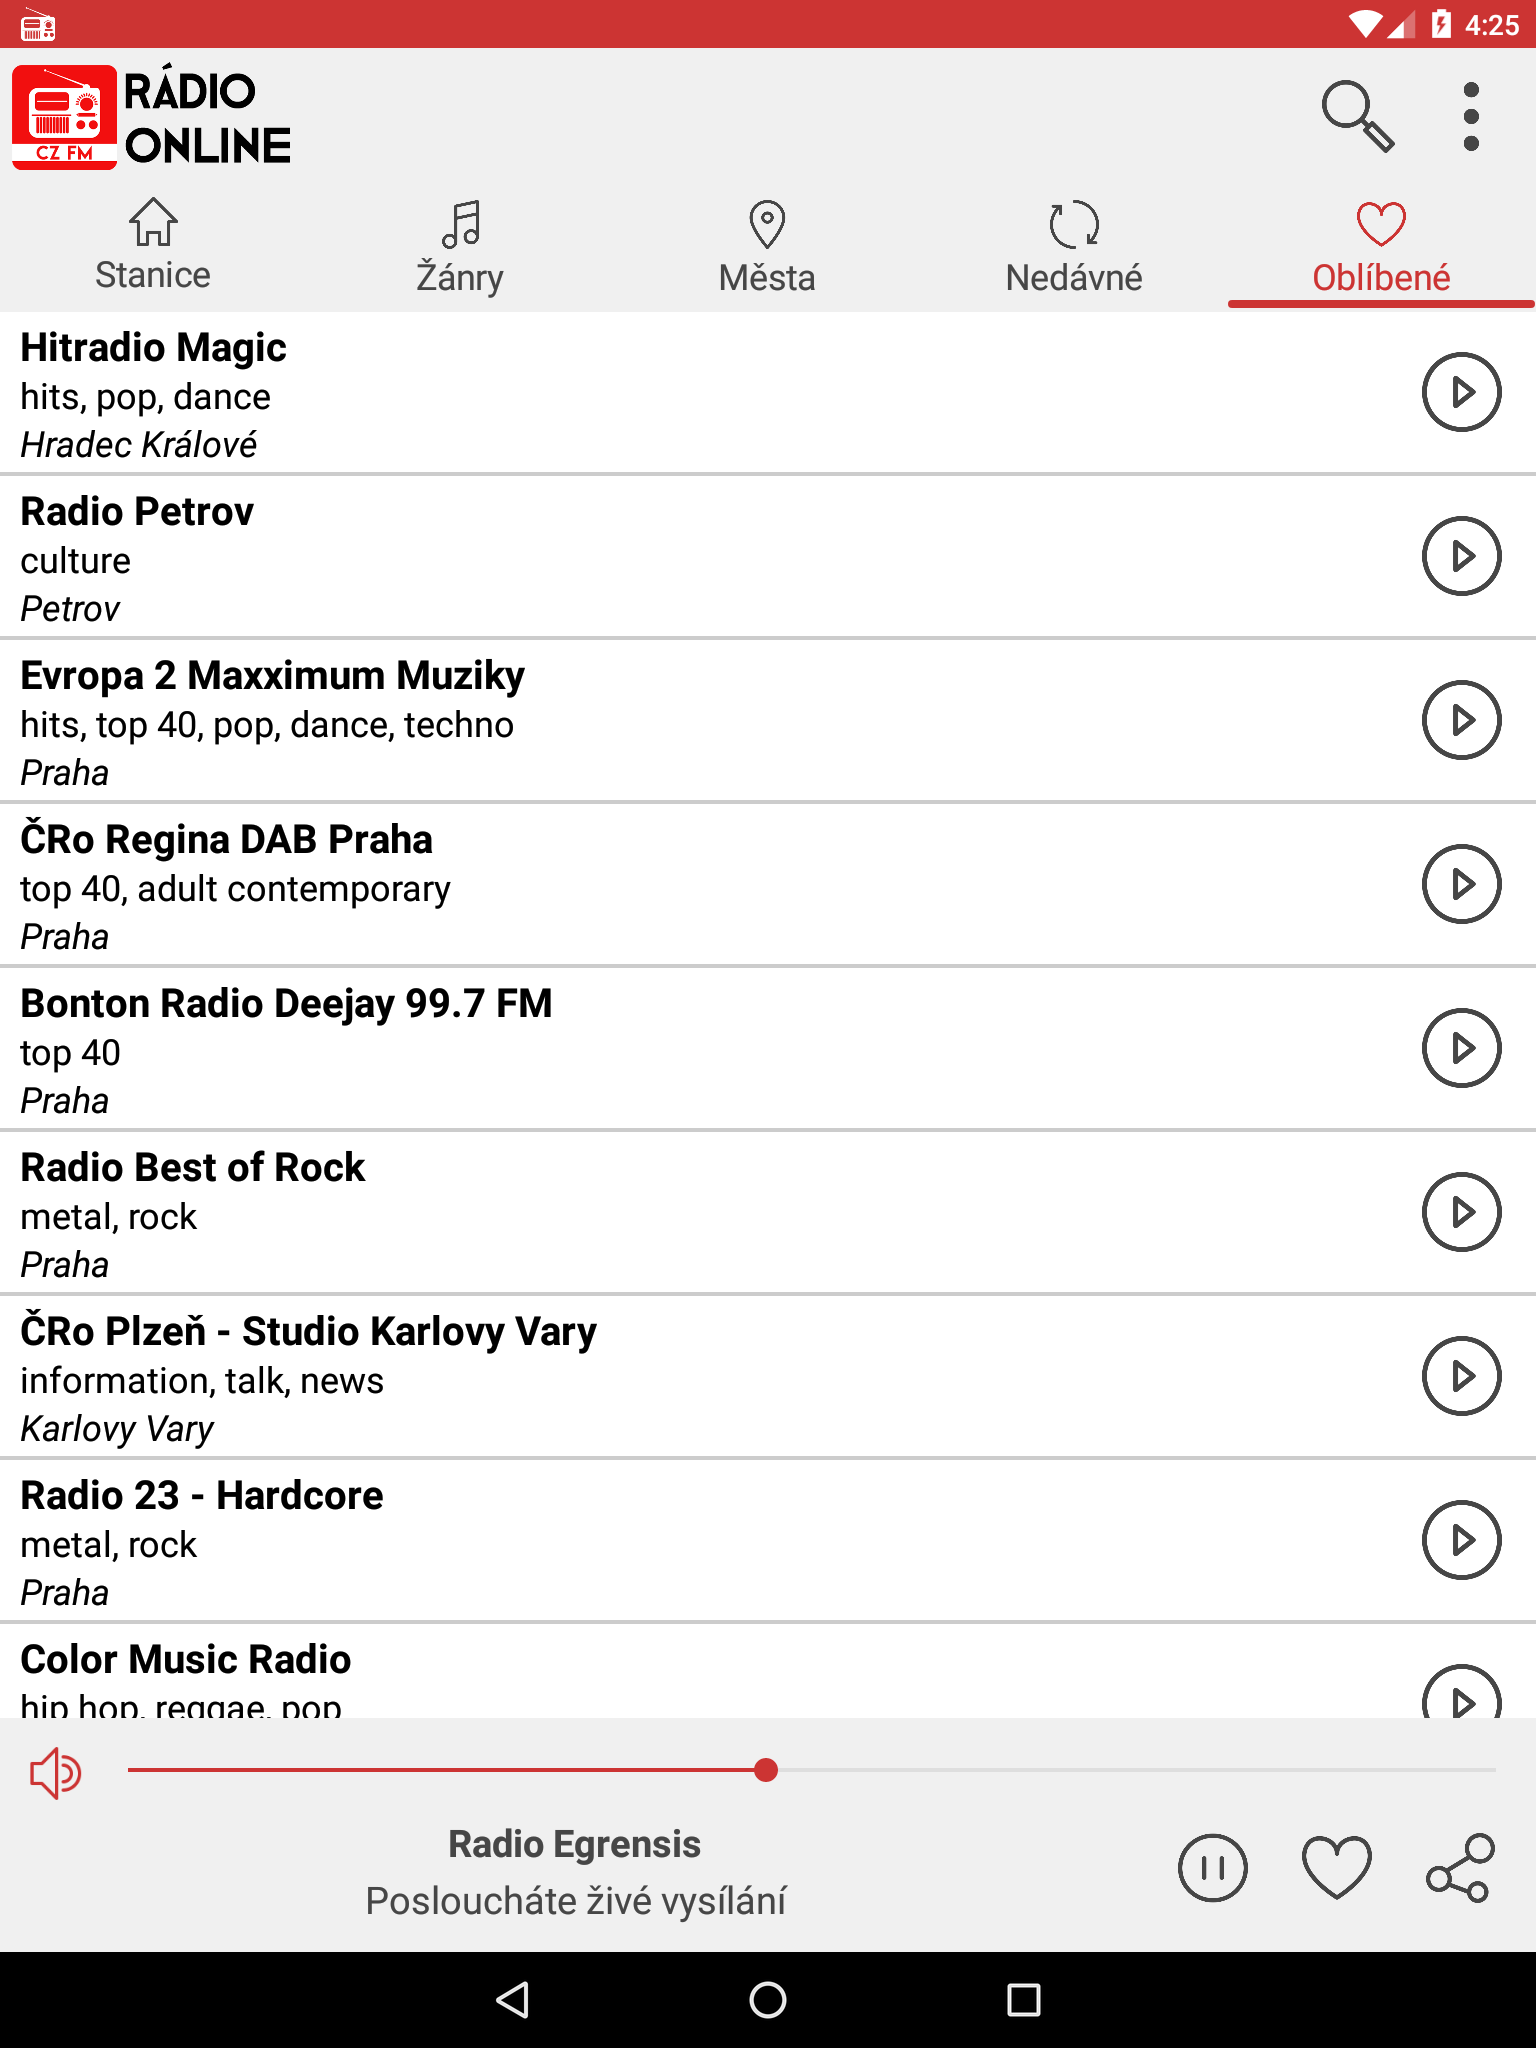 Rádio Online Česká: Live Radio APK 1.4.0 for Android – Download Rádio Online  Česká: Live Radio XAPK (APK Bundle) Latest Version from APKFab.com